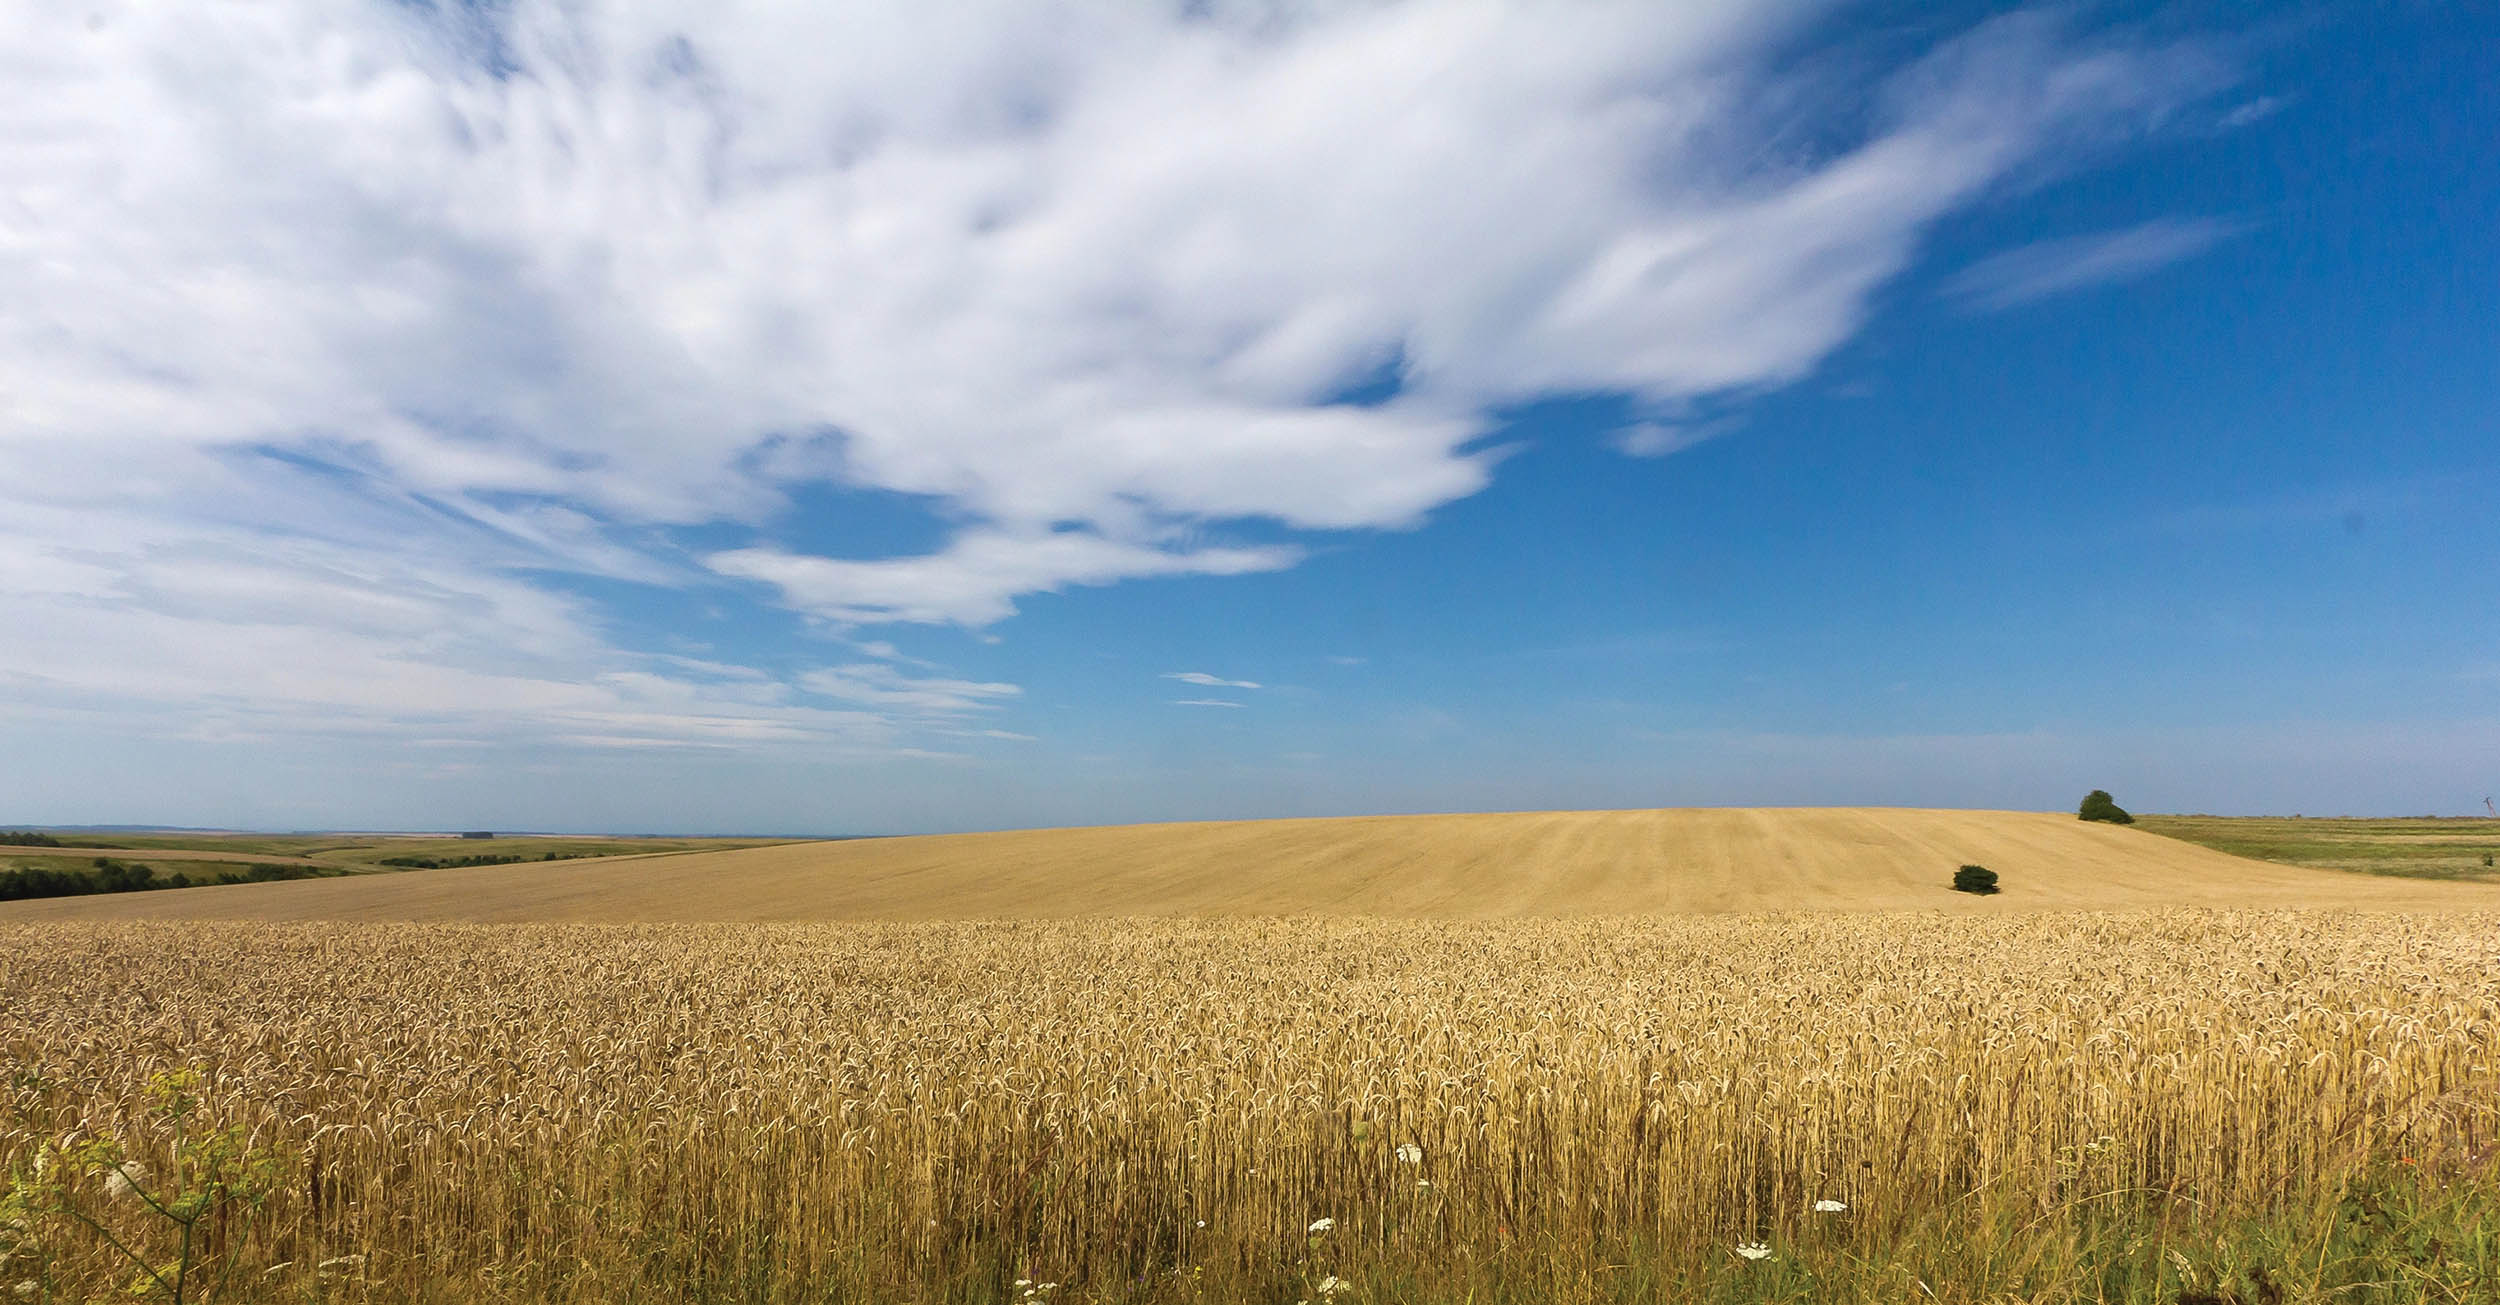 Wheat fields in midsummer in Ukraine, Oblast Lviv, July 19, 2012 (Courtesy Raimond Spekking)